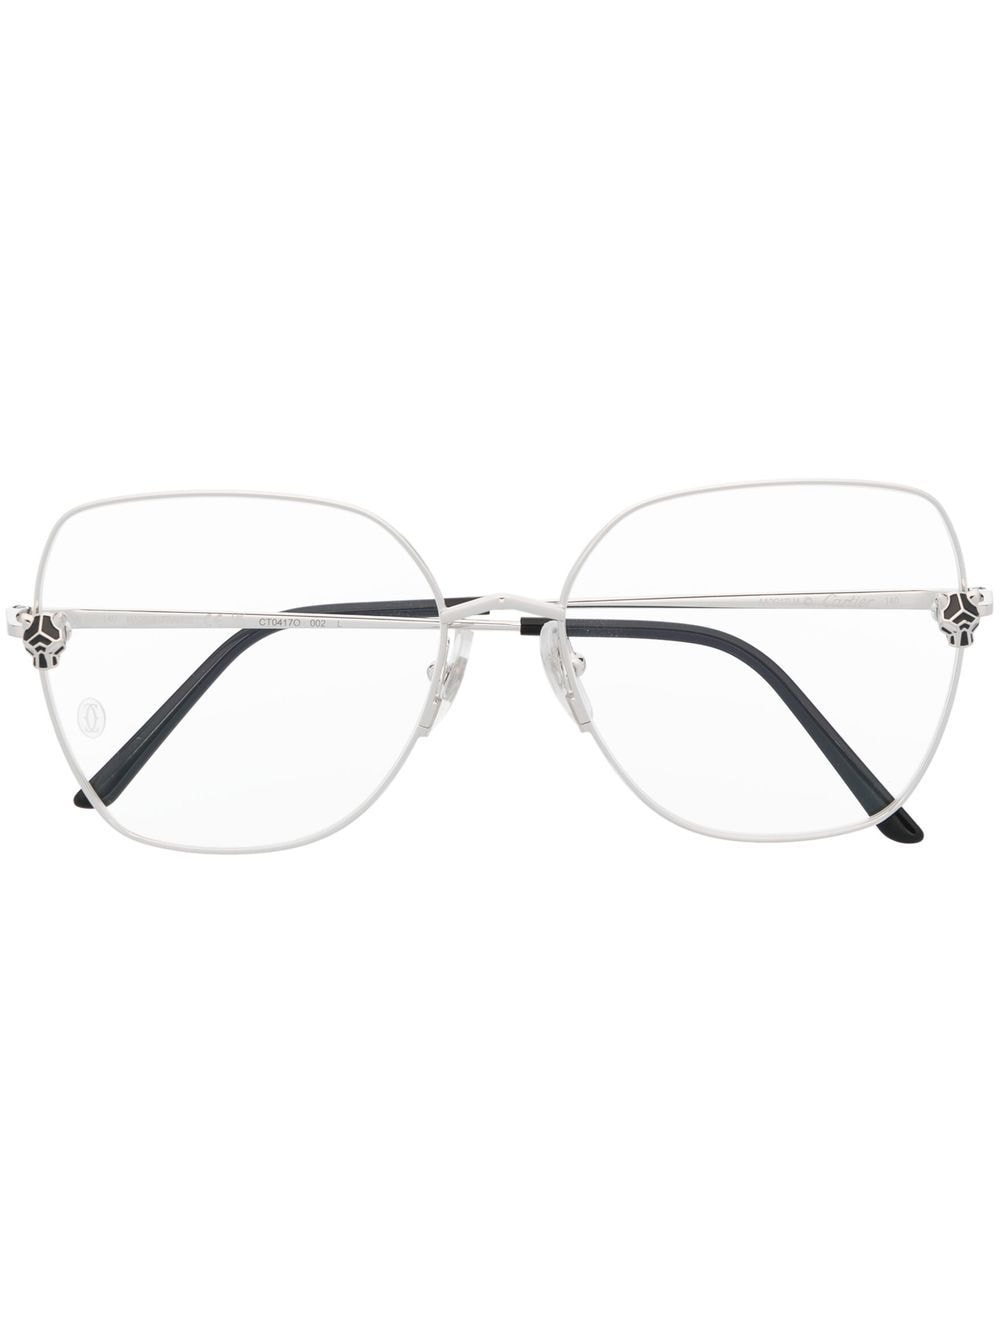 Cartier Eyewear signature Panther oversized glasses - Silver von Cartier Eyewear